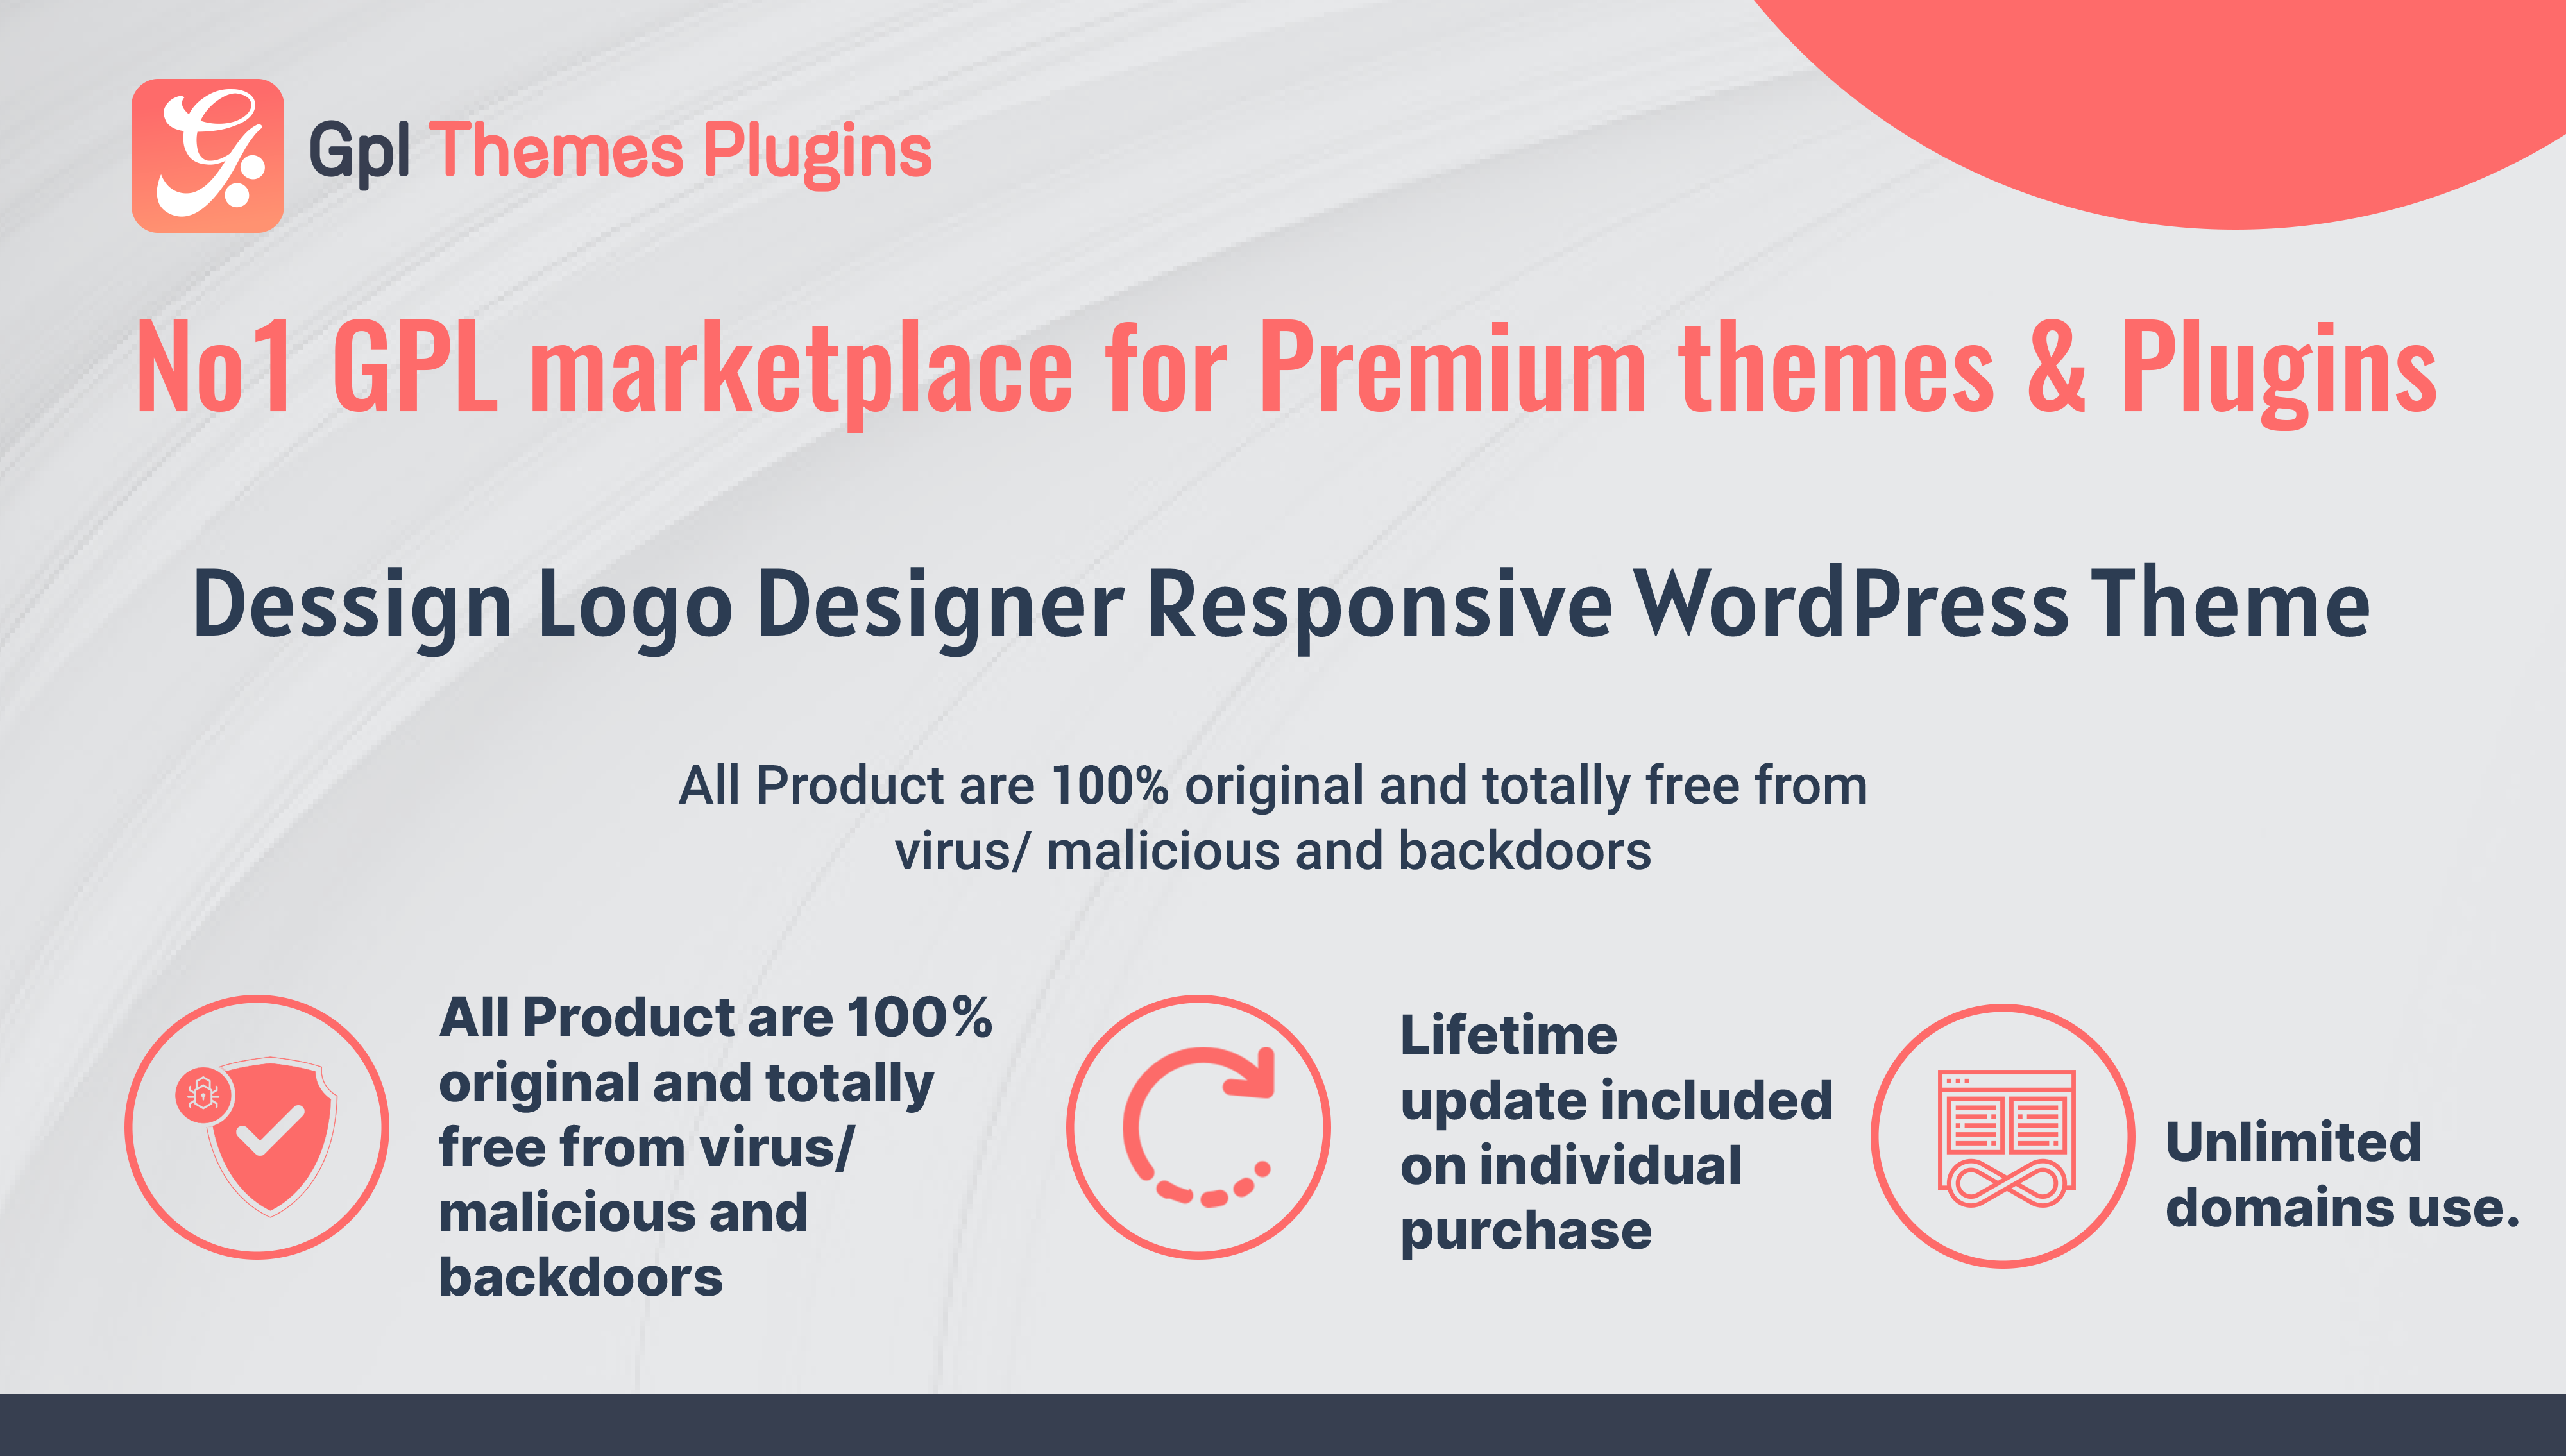 Dessign Logo Designer Responsive WordPress Theme